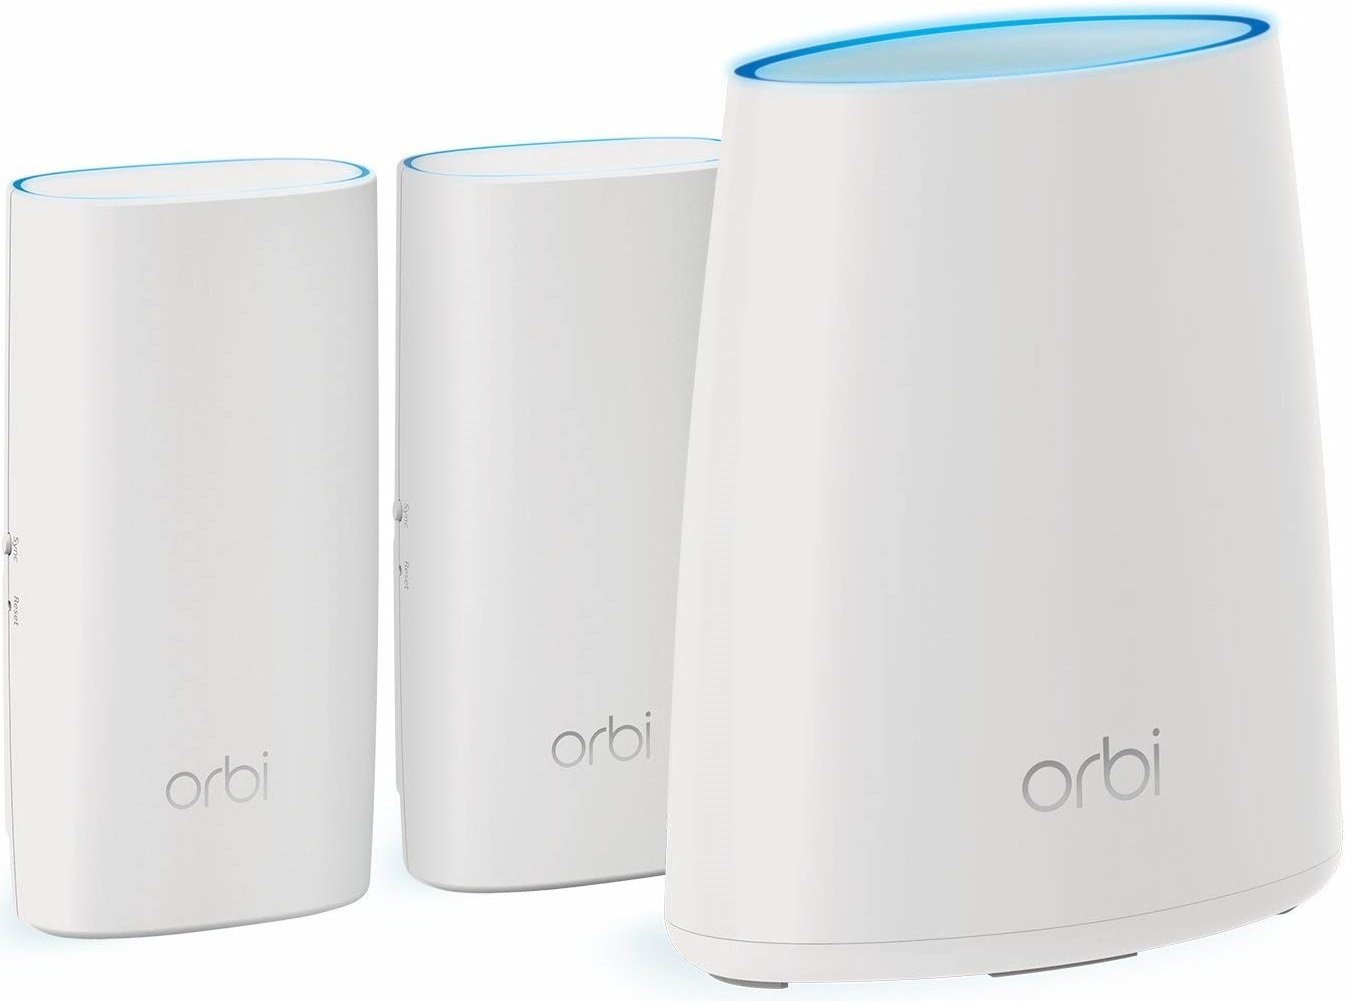 NETGEAR Orbi WallPlug Whole Home Mesh WiFi System Router /& 2 Satellites RBK33